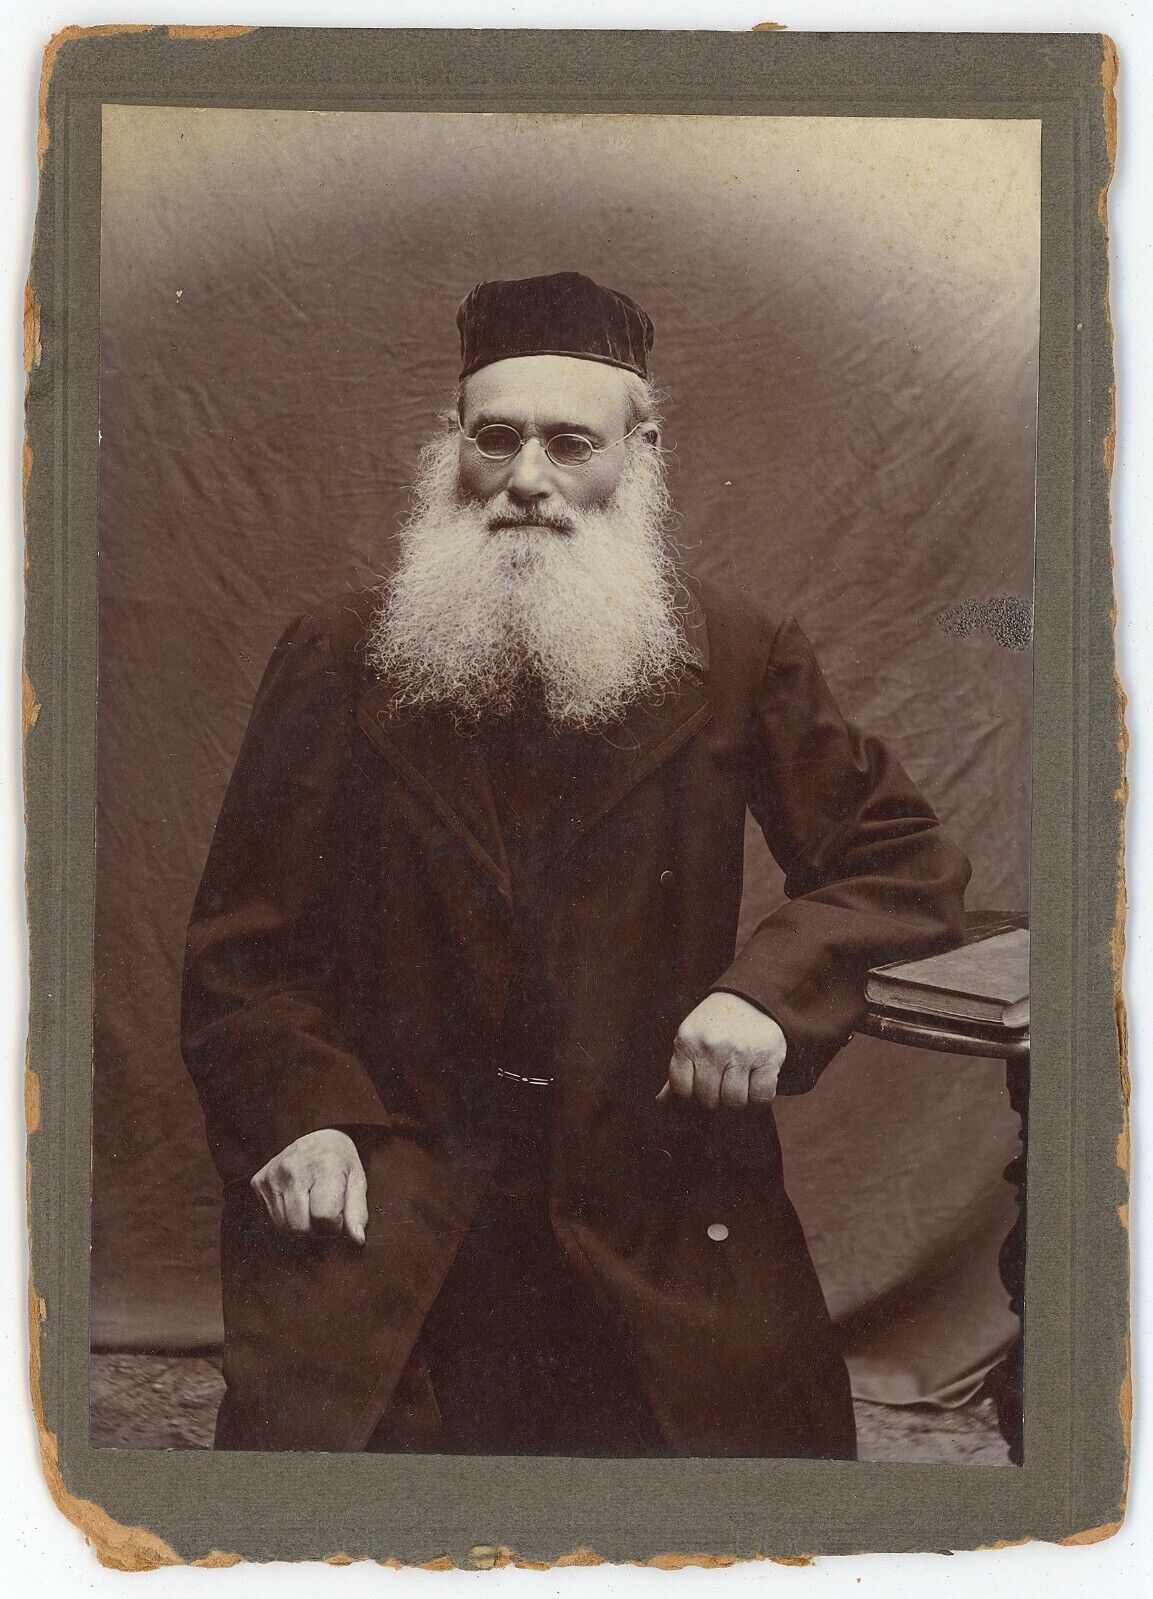 Antique c1890s Trimmed Rare Cabinet Card Rabbi Wearing Coat & Glasses Full Beard